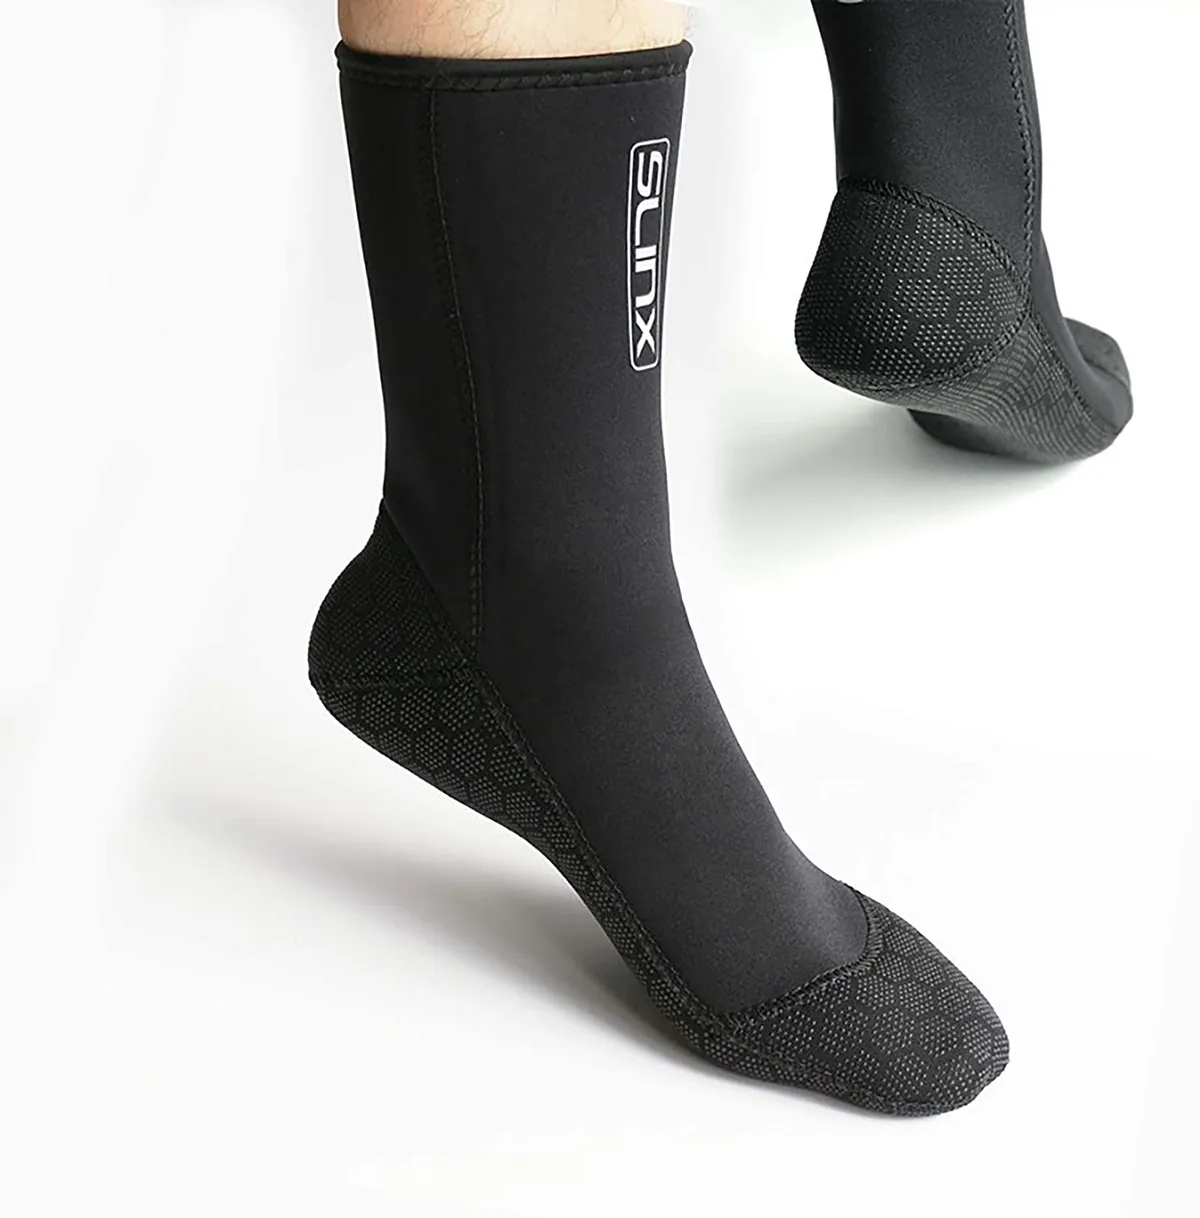 Black swimming socks on a white background.